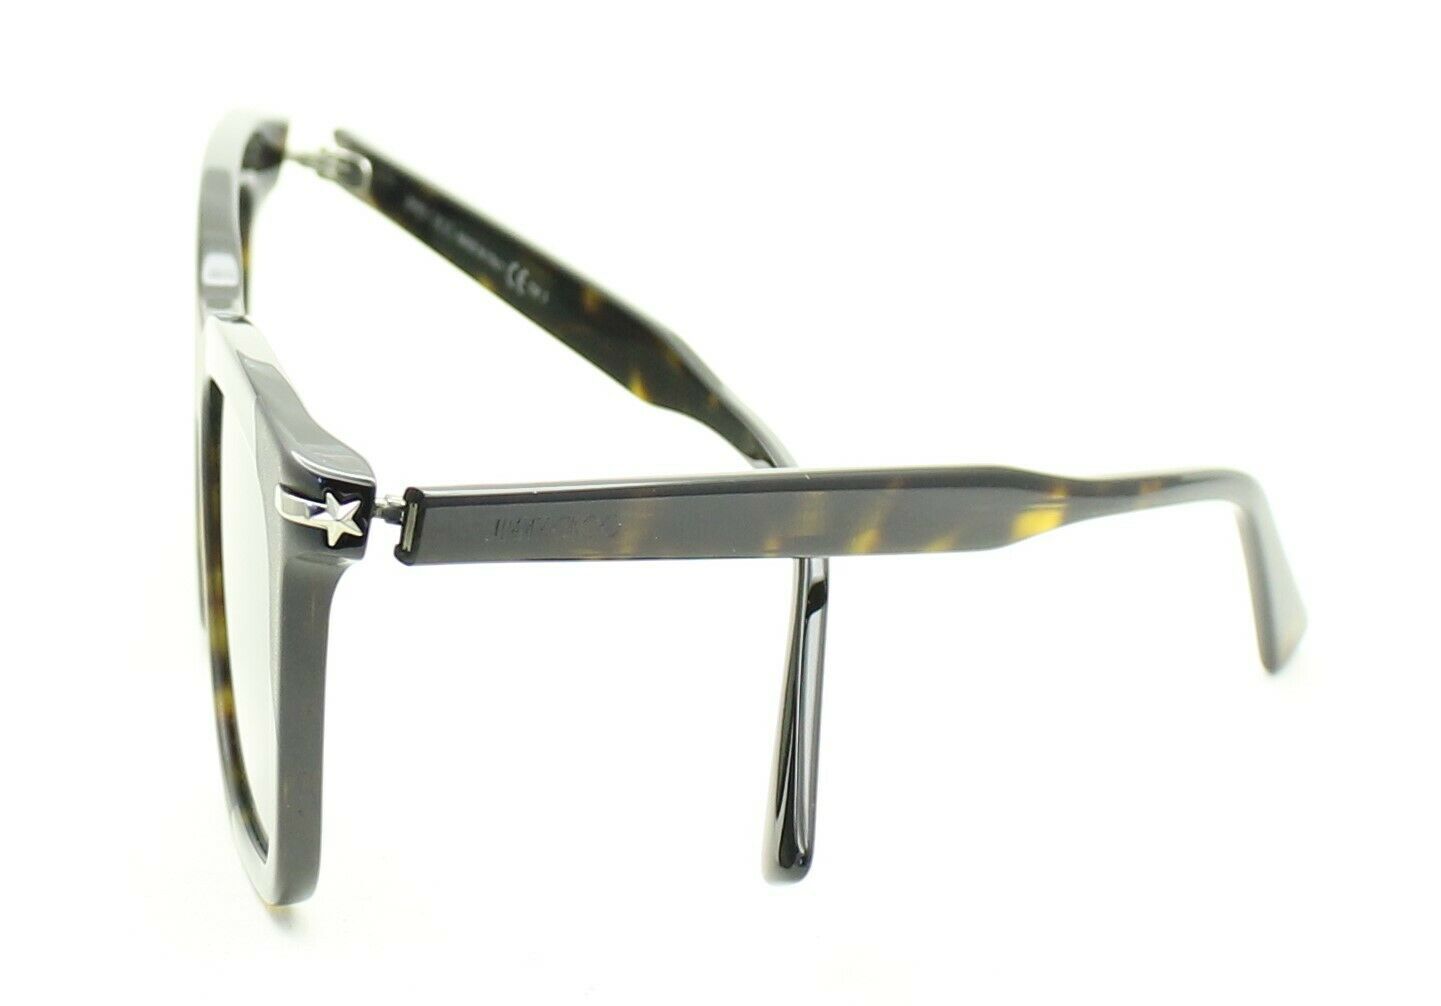 JIMMY CHOO TIP/G/S 086QT 54mm Sunglasses Shades Frames Eyewear New BNIB - Italy